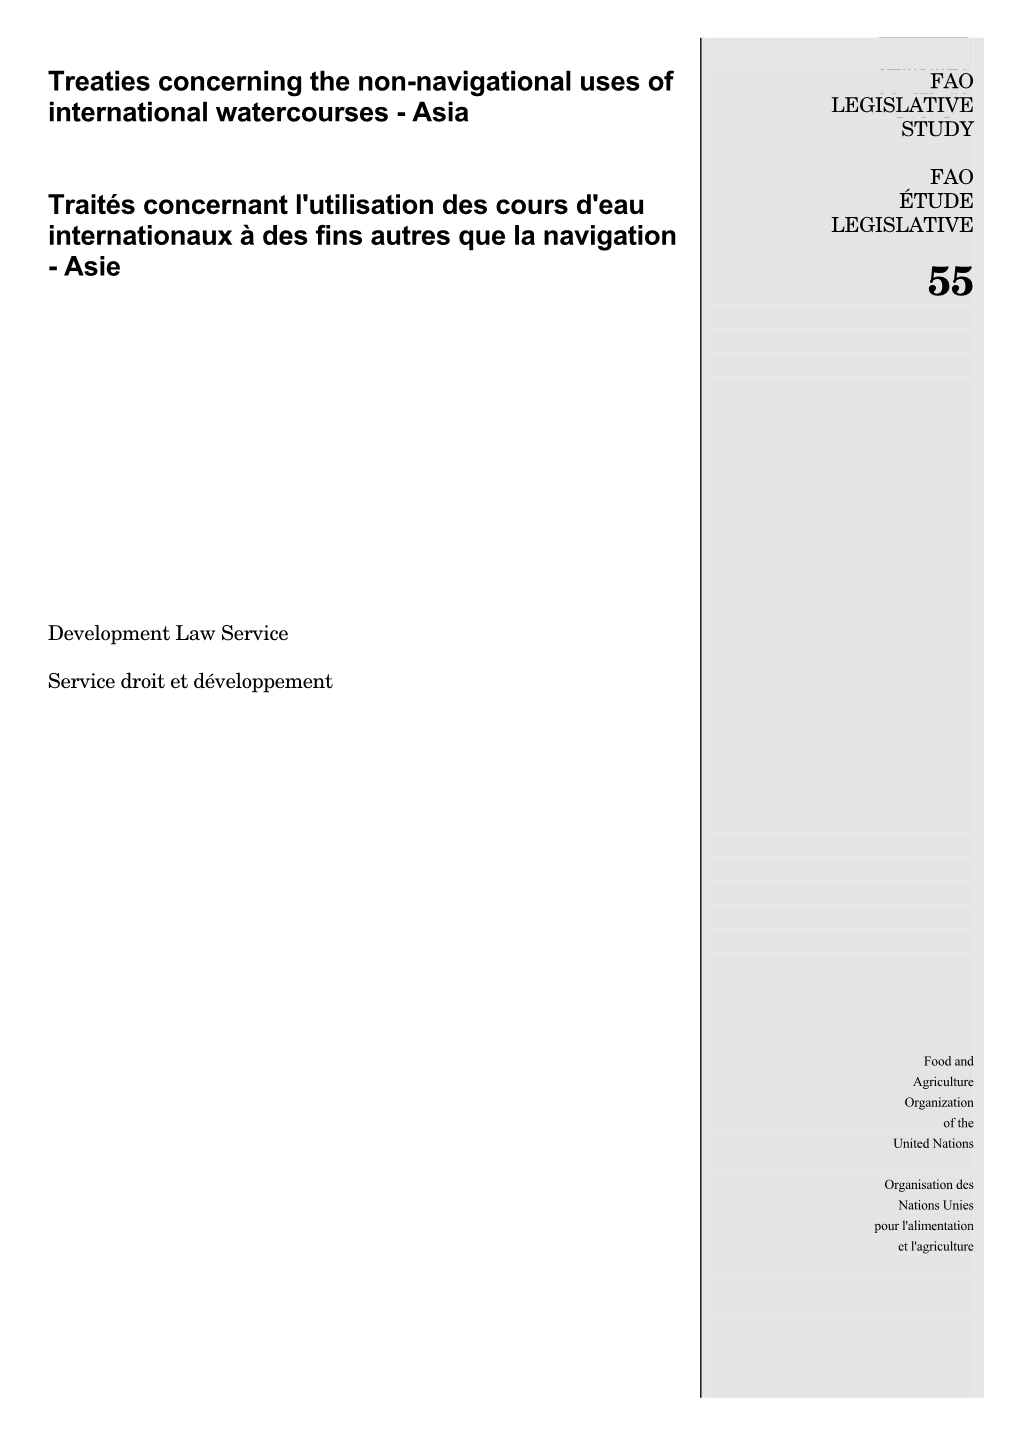 Treaties Concerning the Non-Navigational Uses of FAO International Watercourses - Asia LEGISLATIVE STUDY